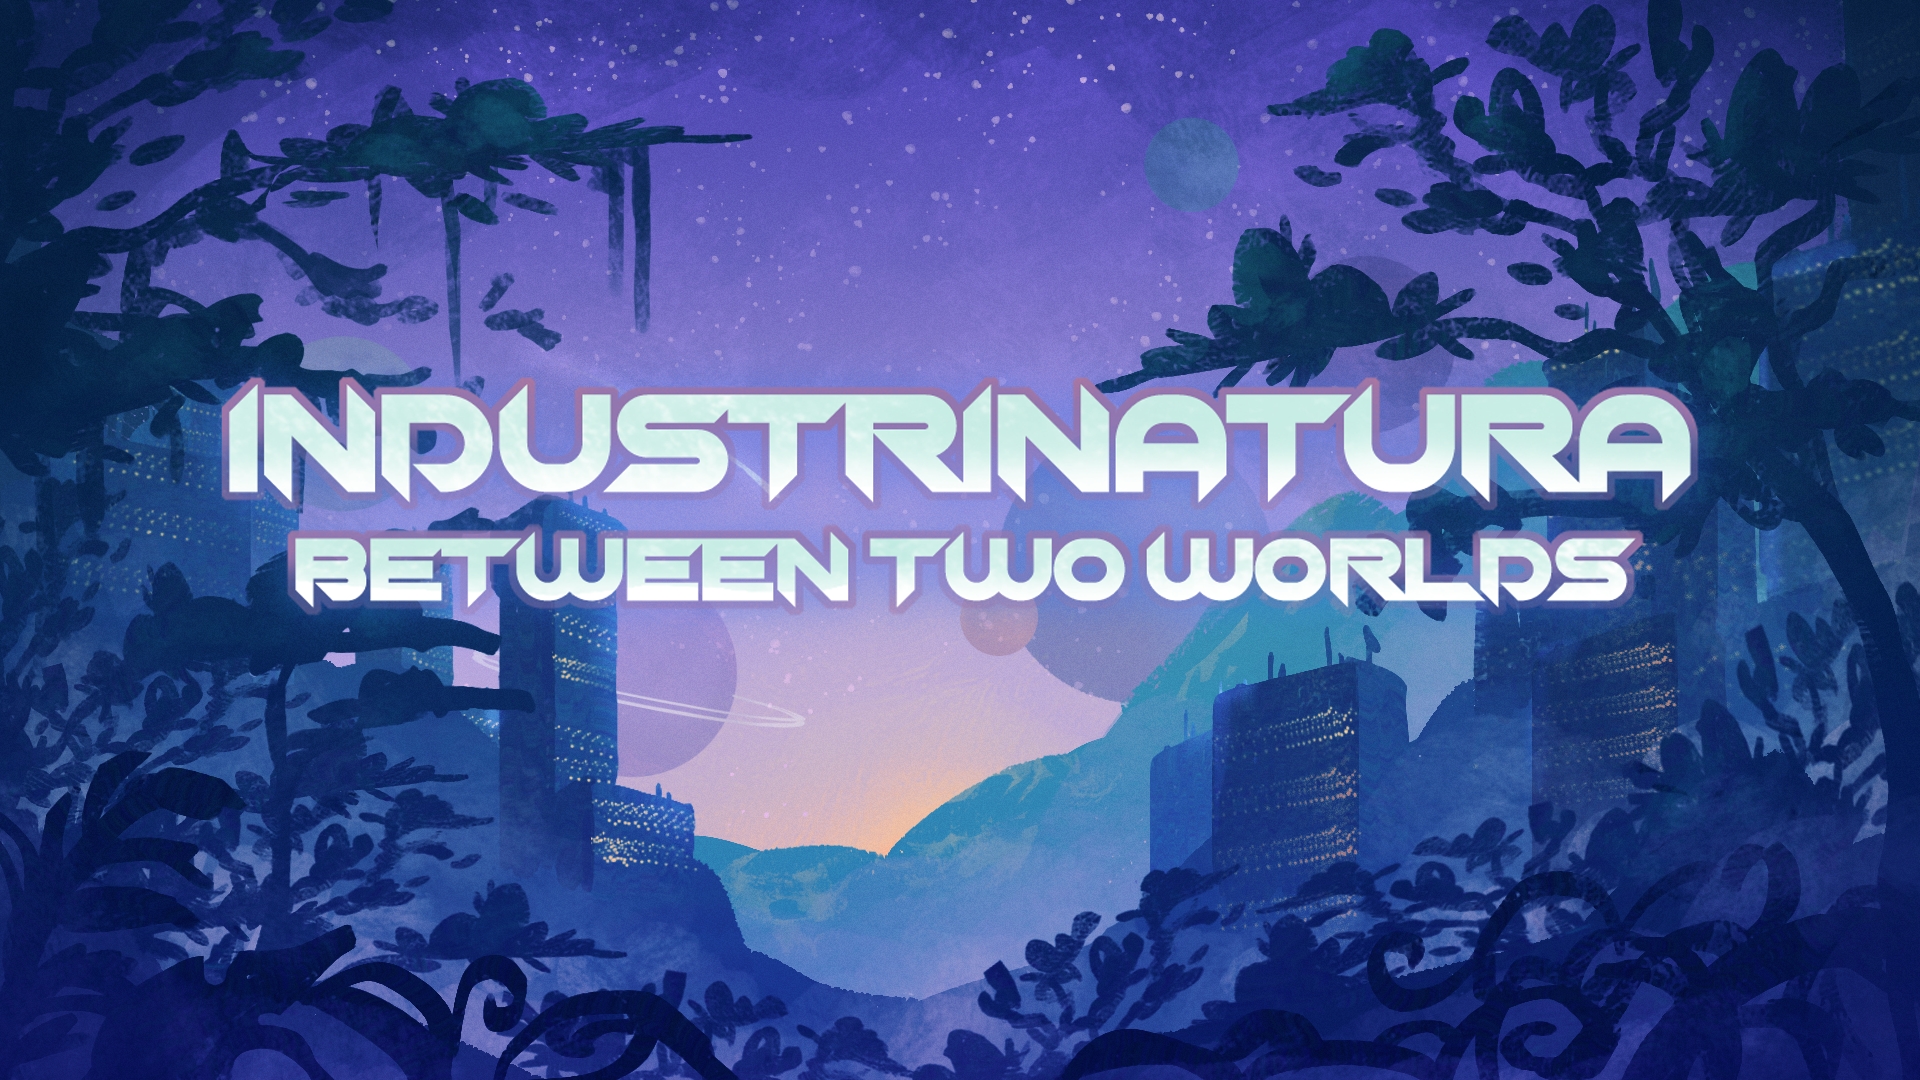 IndustriNatura: Between Two Worlds